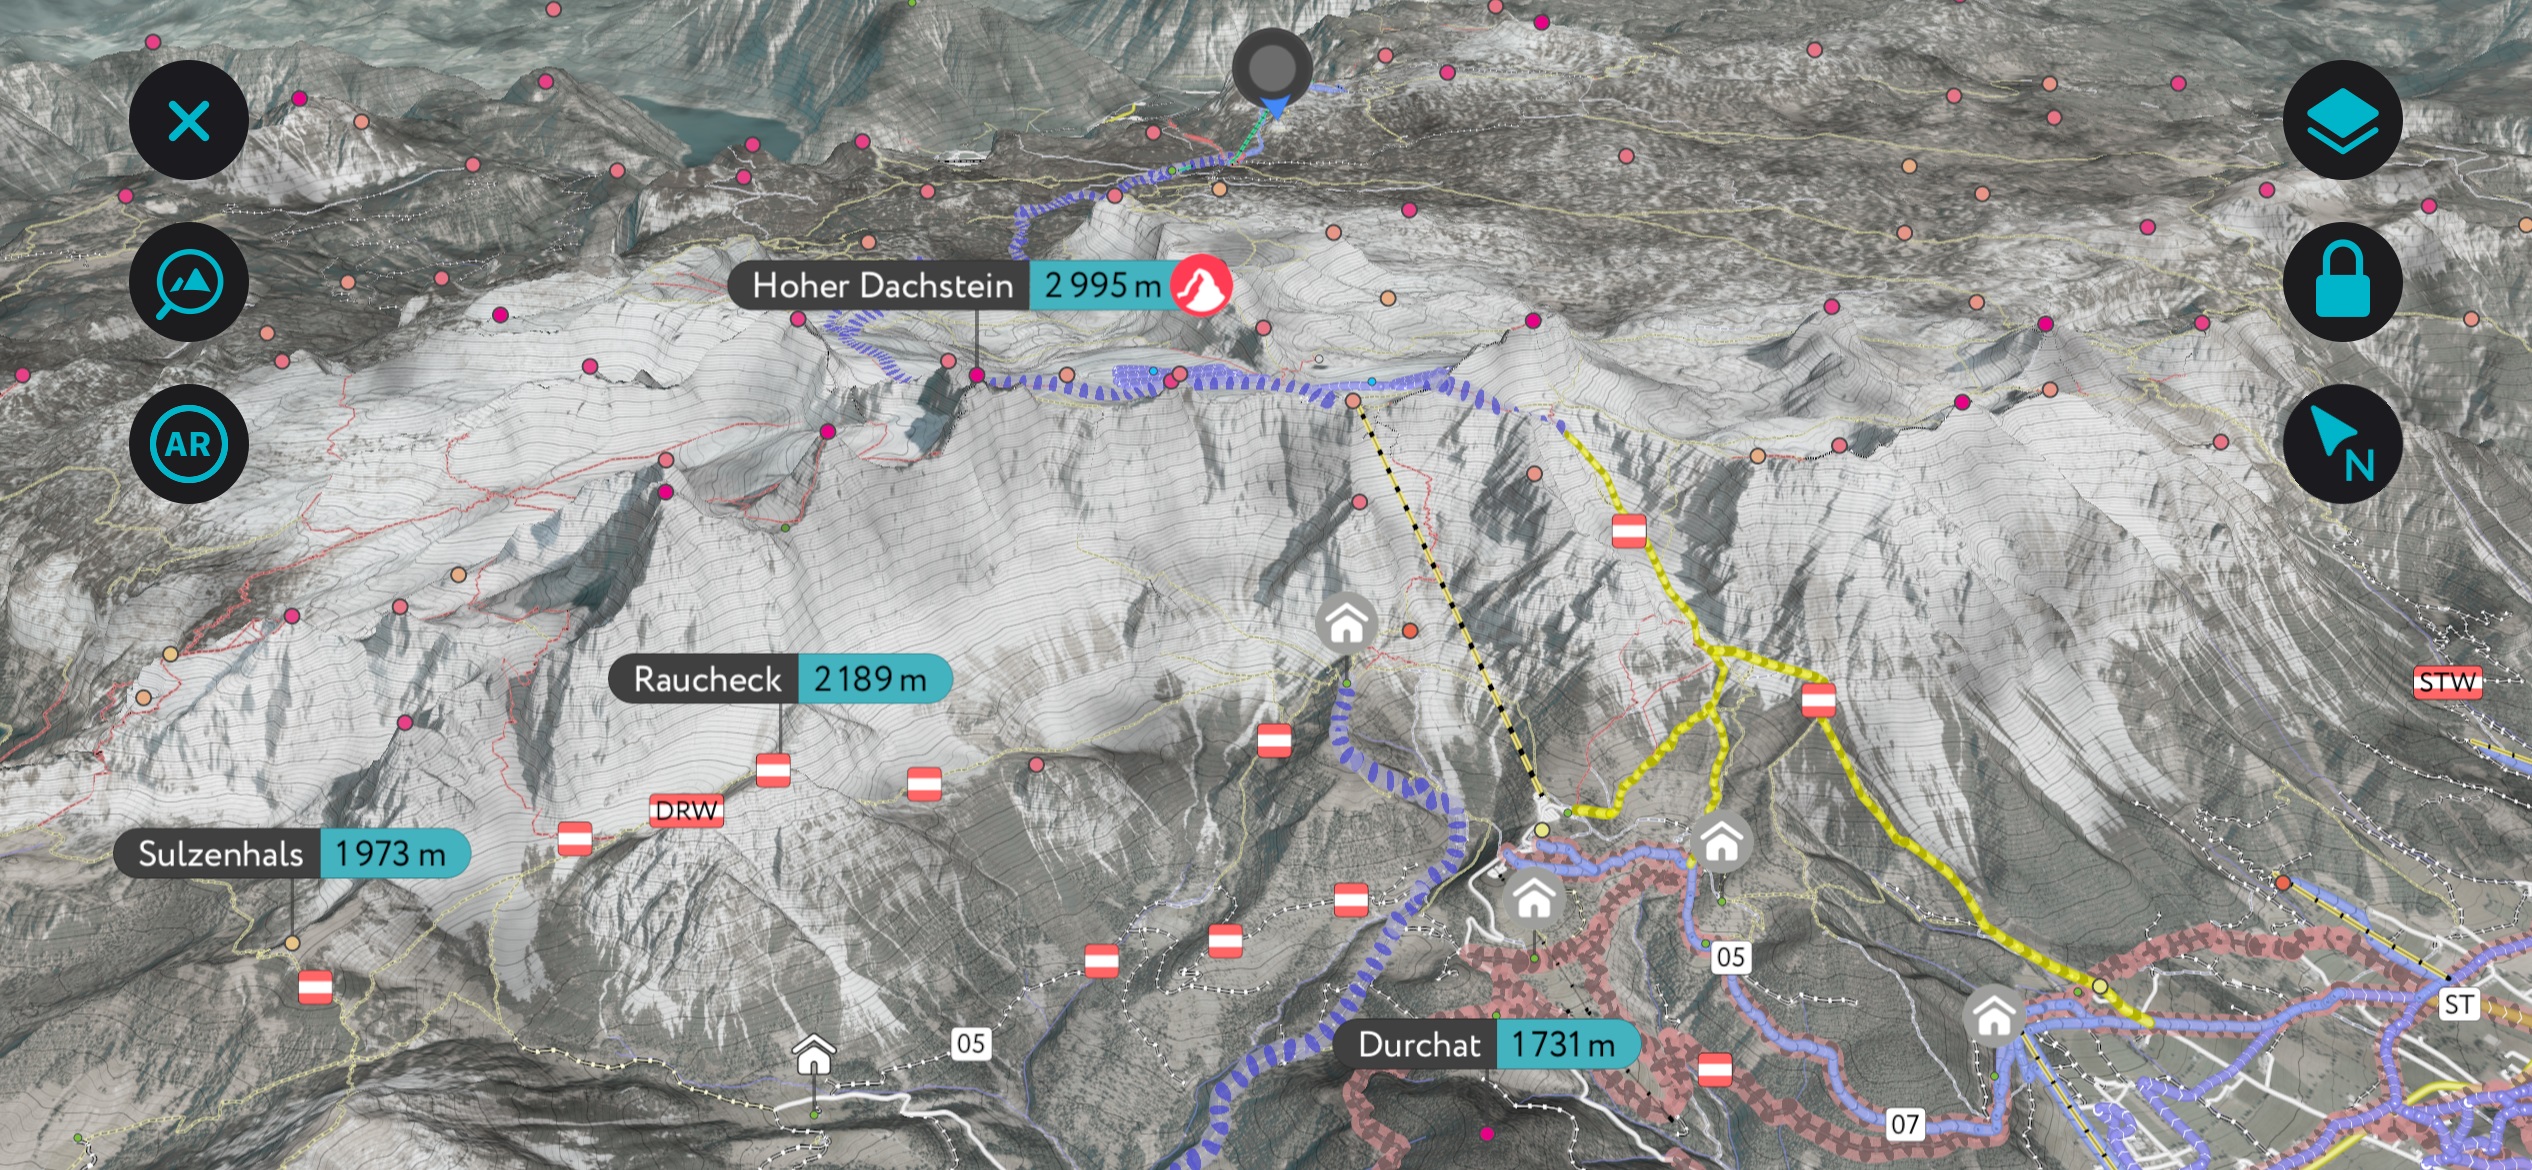 Dachstein Massif in Winter Mode using PeakVisor’s mobile app. Dachstein Mountains